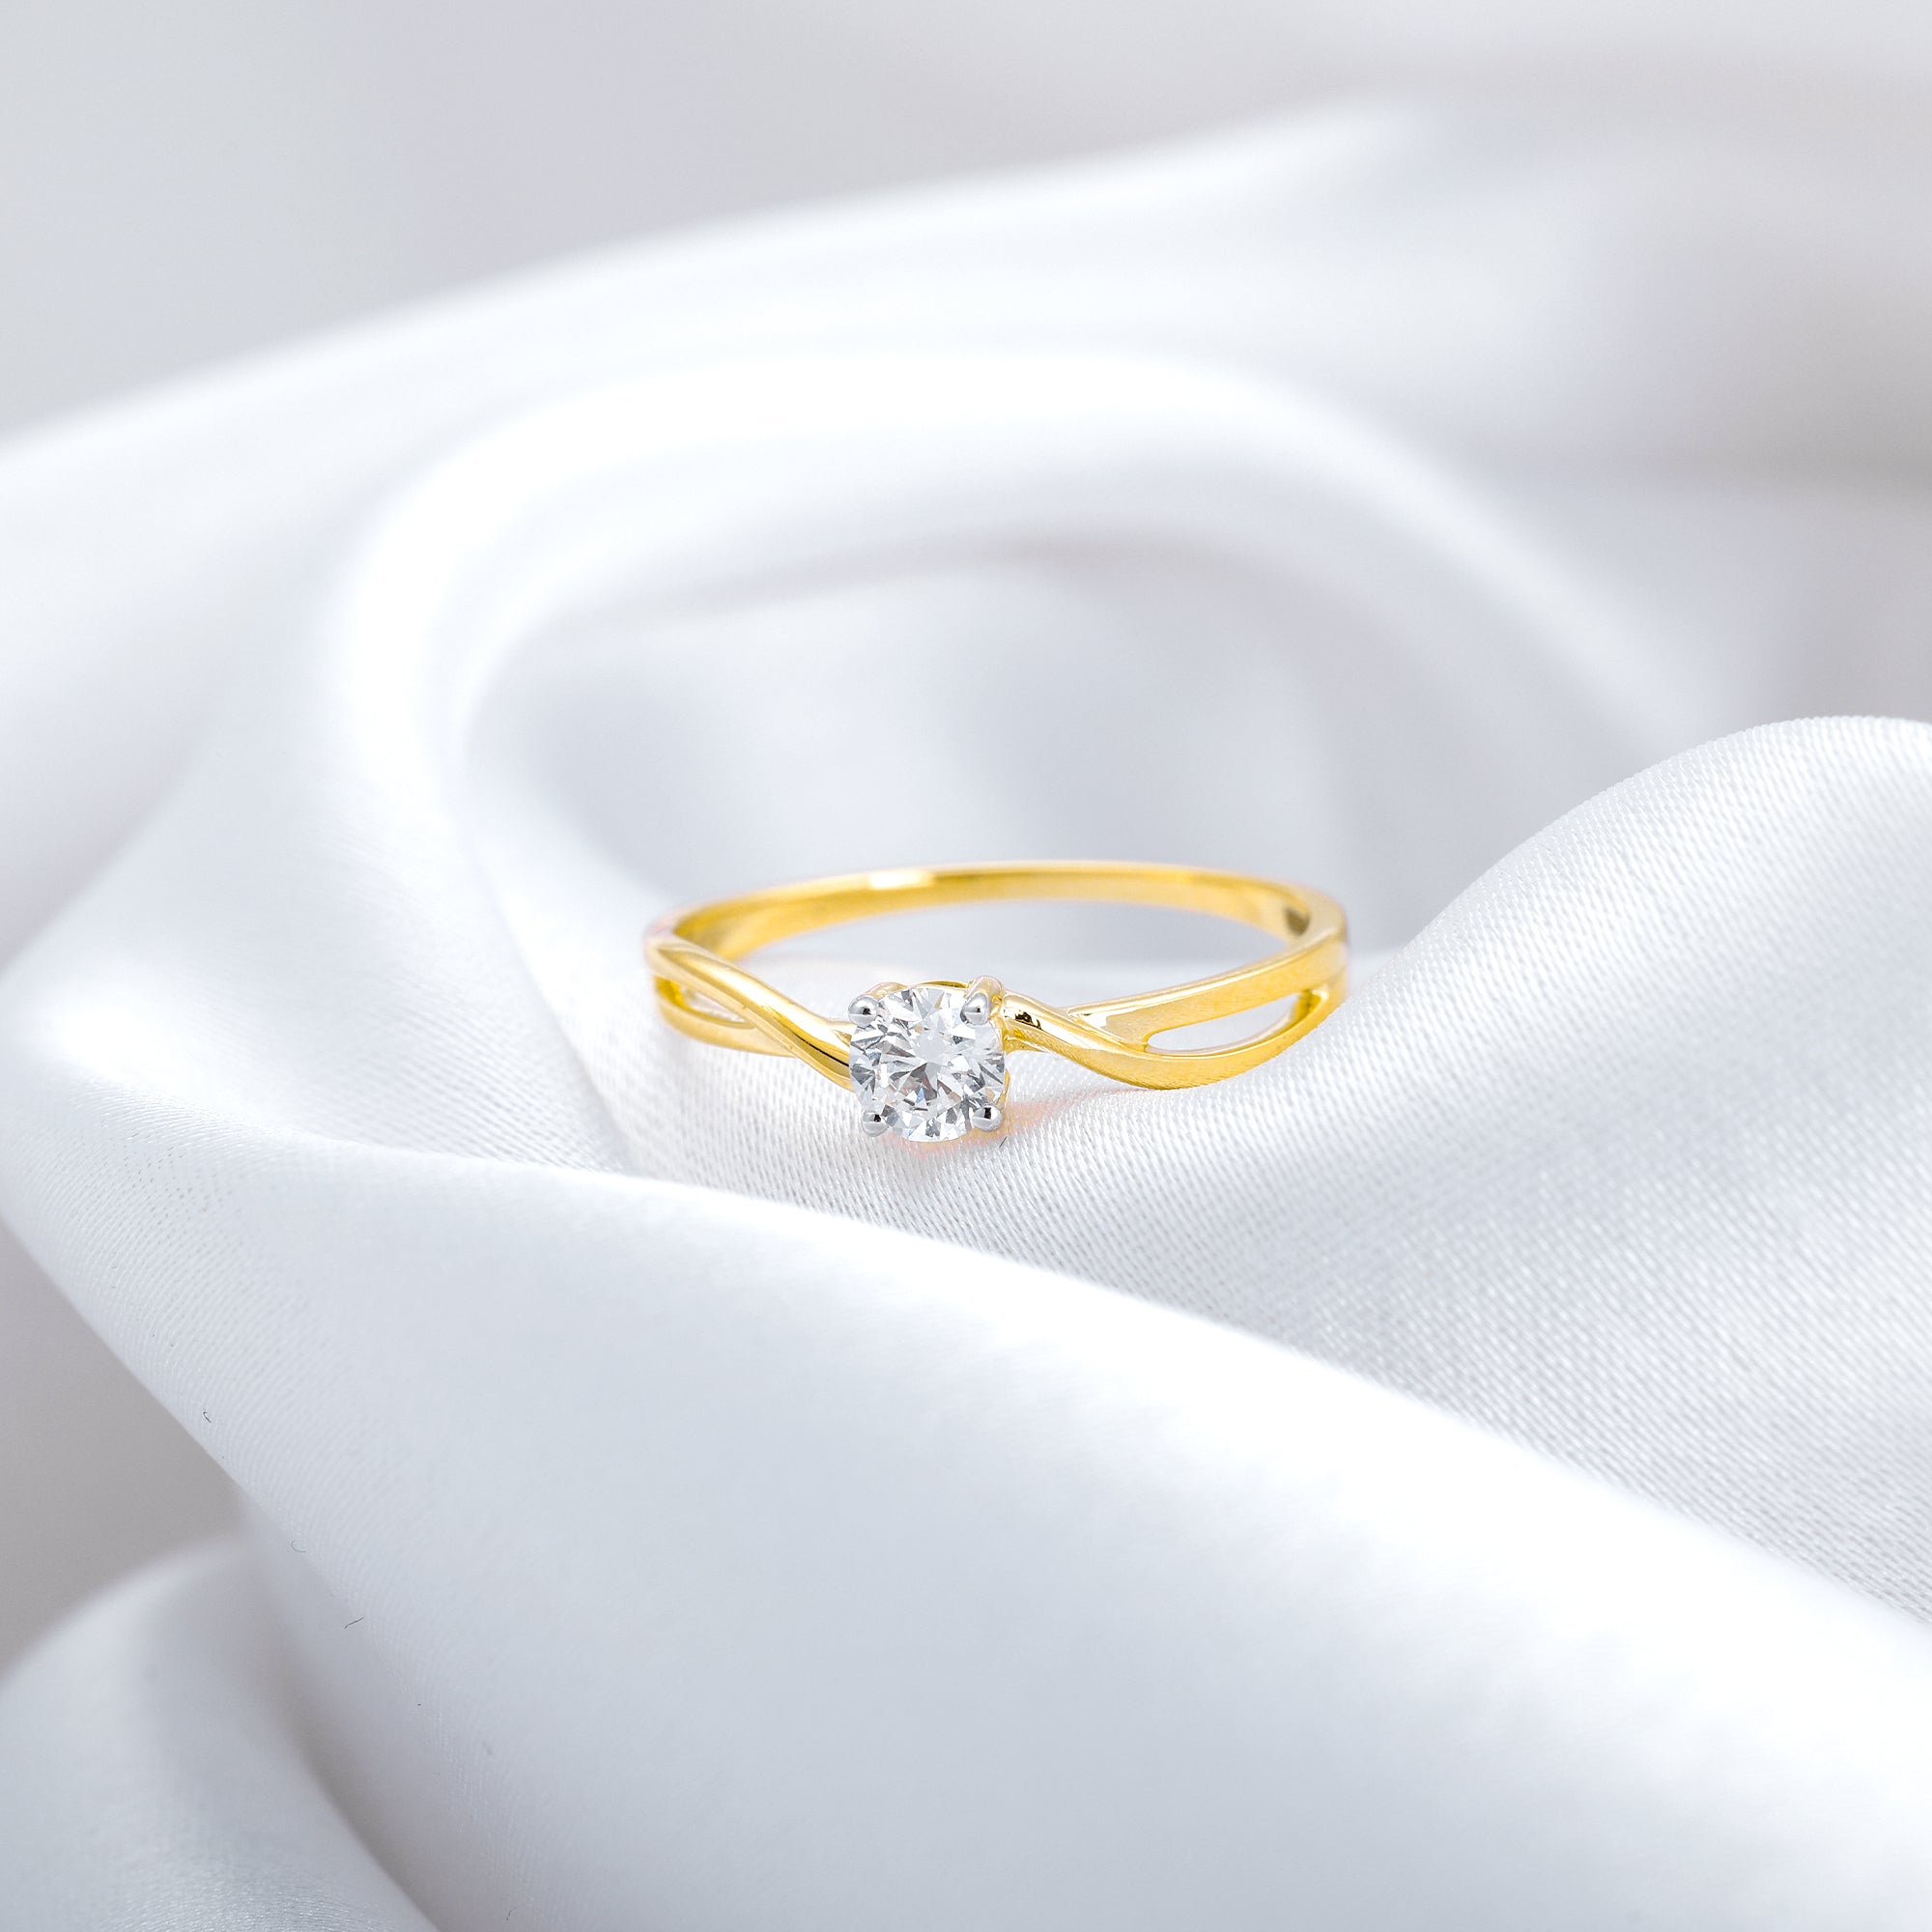 Fancy Black Diamond Solitaire Engagement Ring 14k Rose Gold 1.07 Carat  Heart Designs handmade